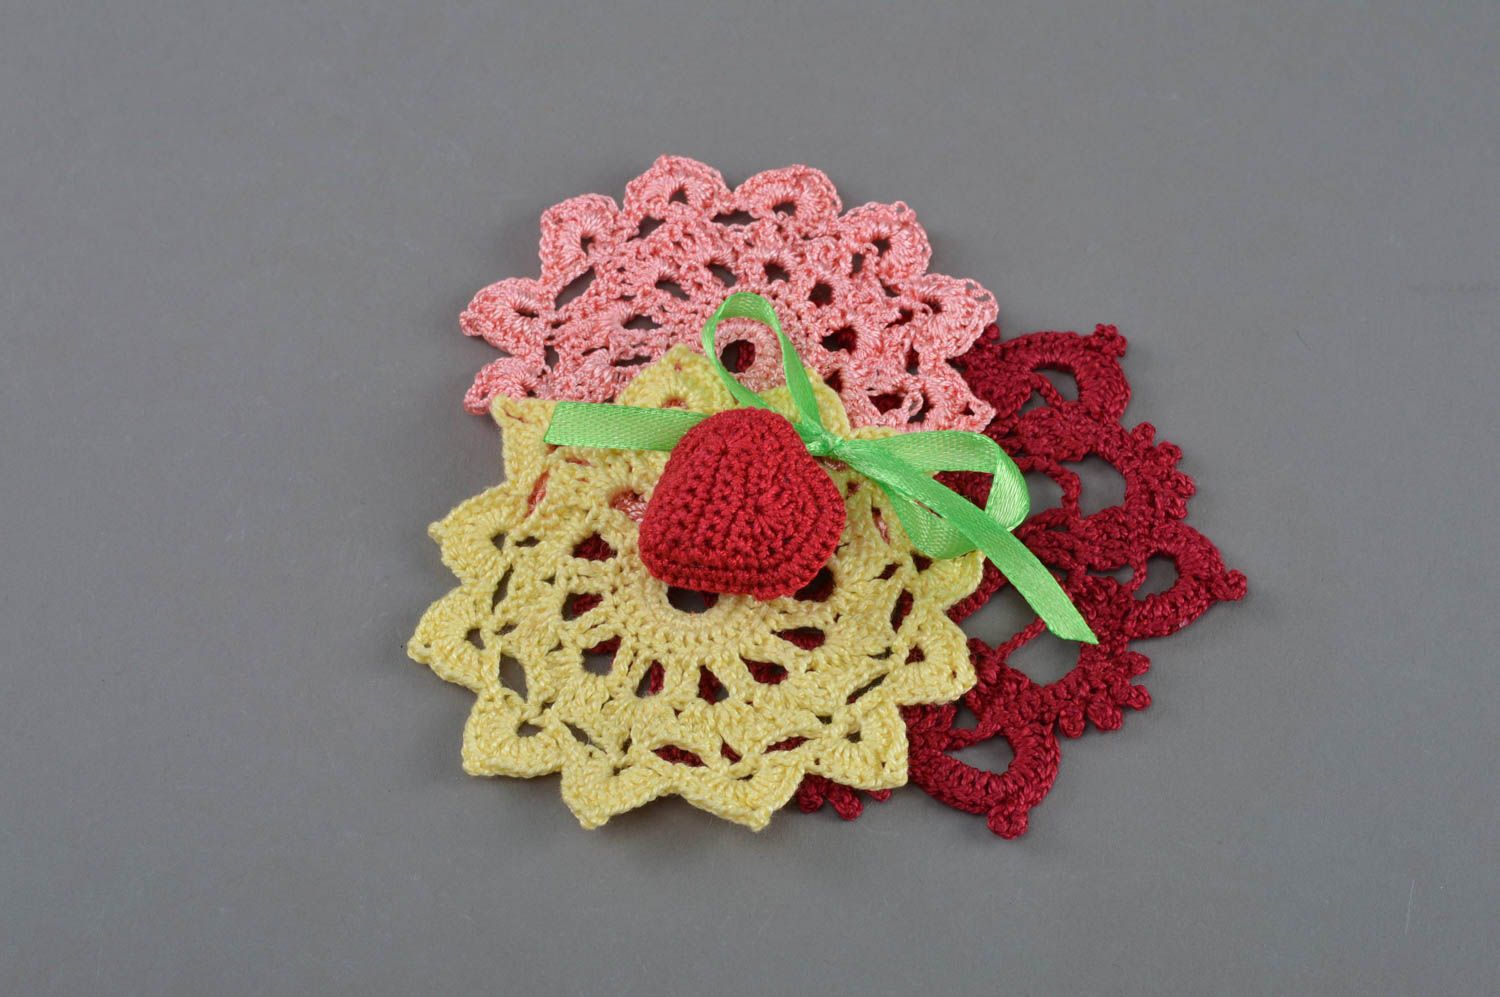 Decorative crocheted handmade cotton napkin for coffee table home decor ideas photo 1